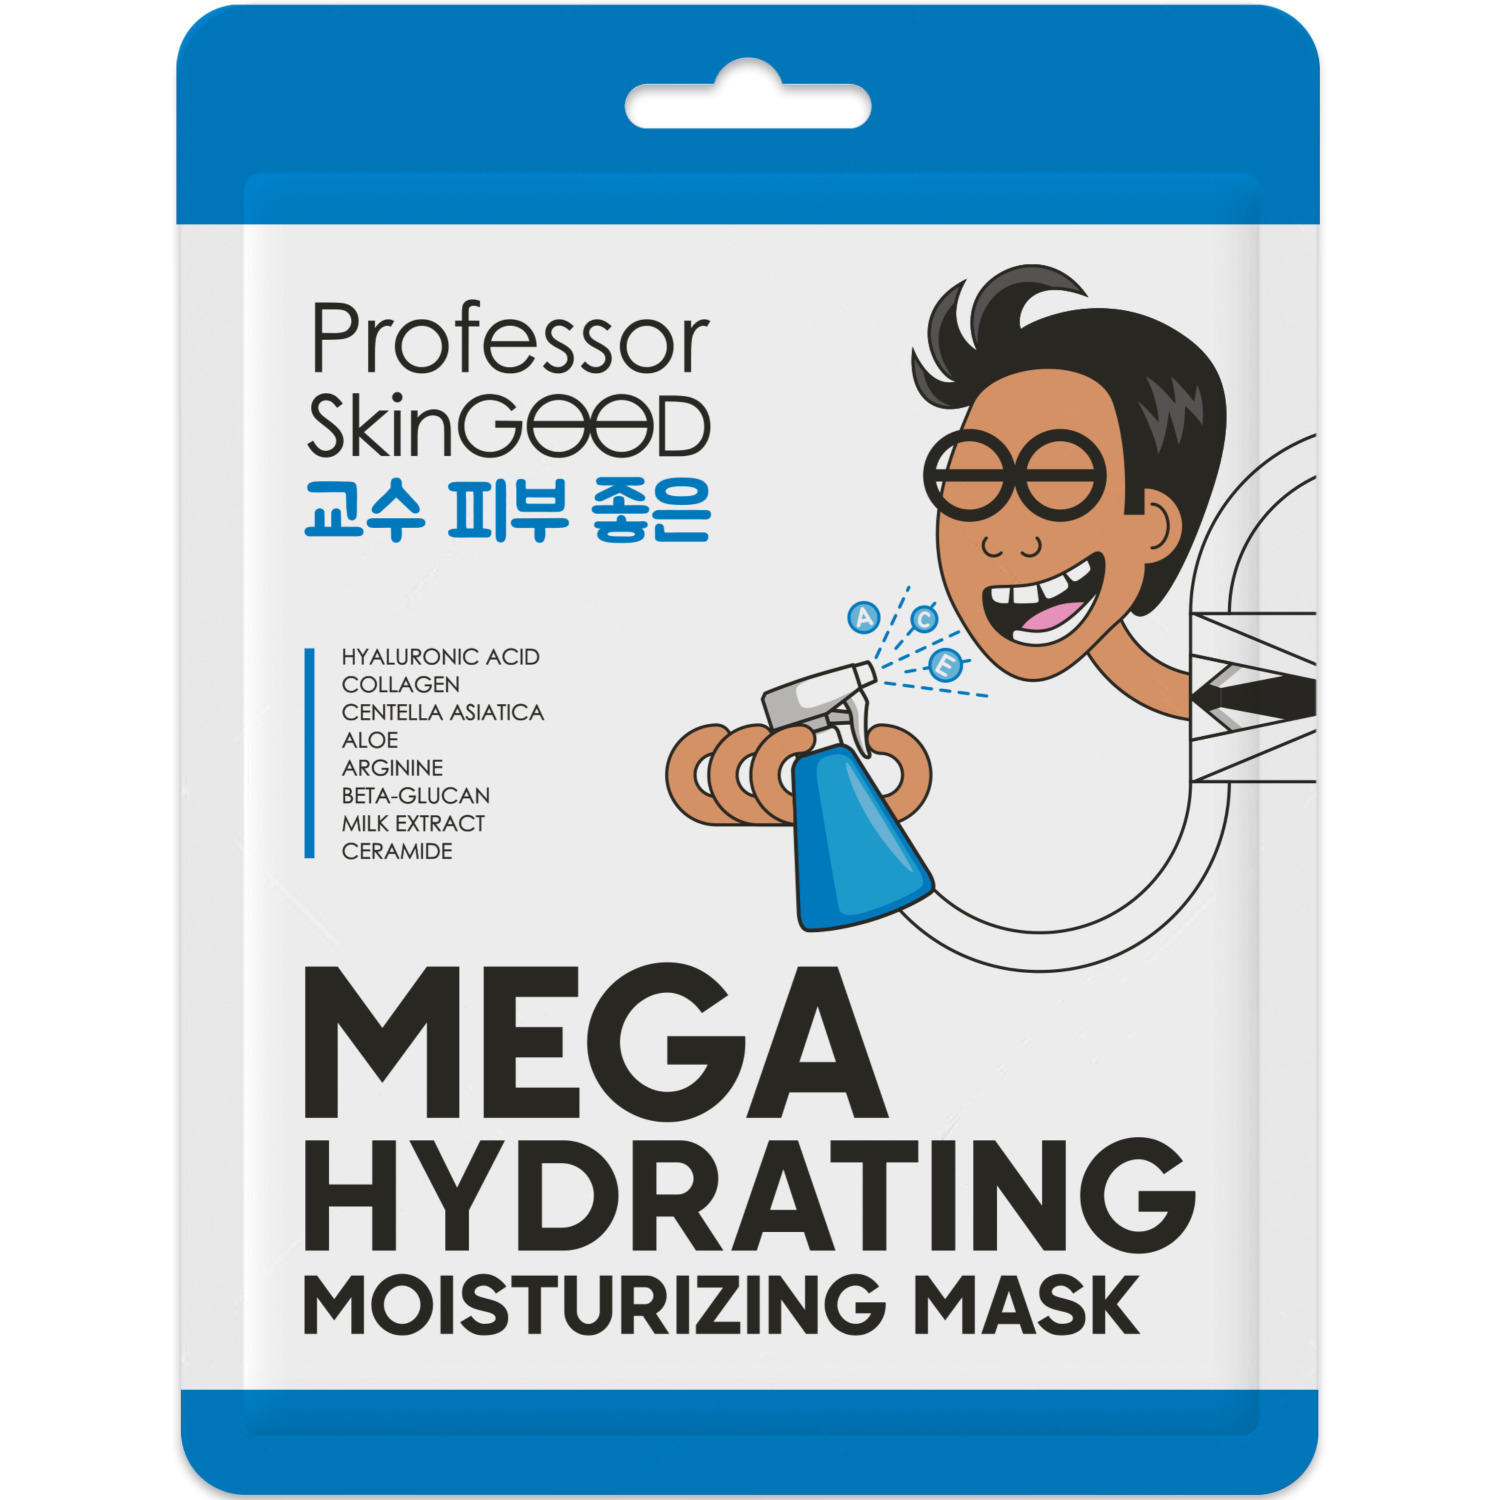 Professor SkinGOOD Увлажняющая маска Mega Hydrating Moisturizing Mask, 25 г (Professor SkinGOOD, Маски) professor skingood увлажняющая маска mega hydrating moisturizing mask 1шт